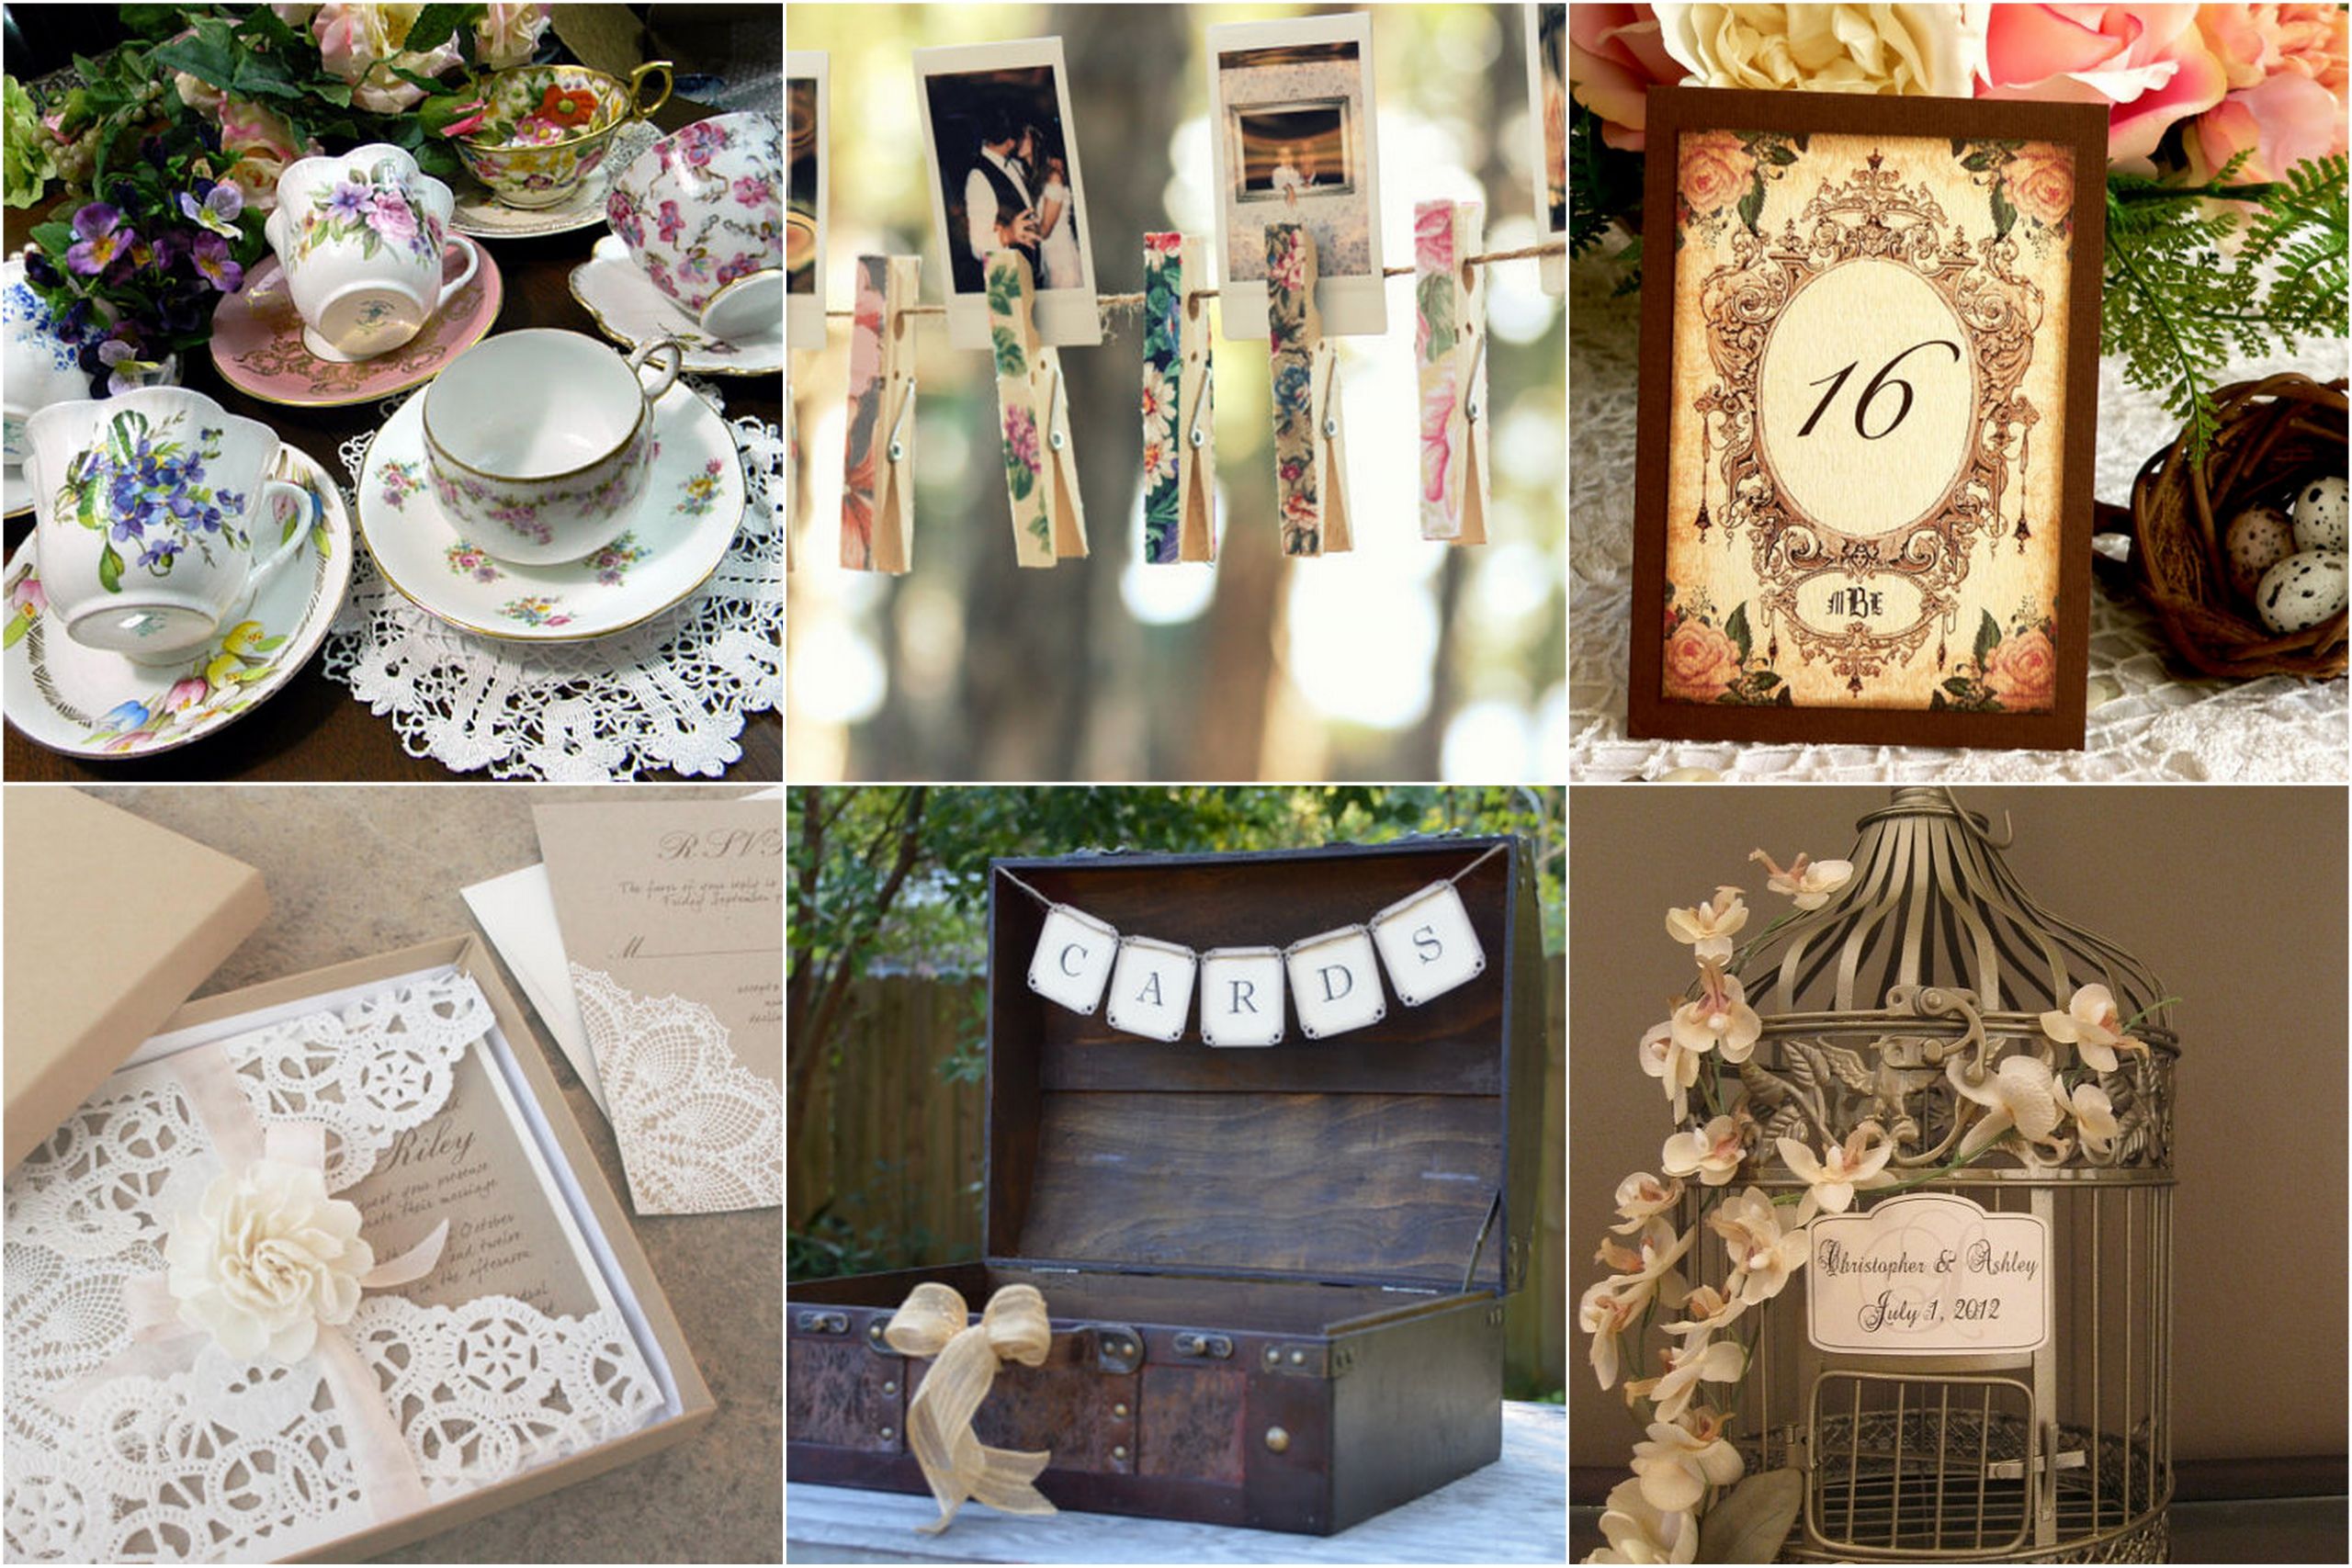 Themed Weddings Ideas
 10 Great Destination Wedding Themes